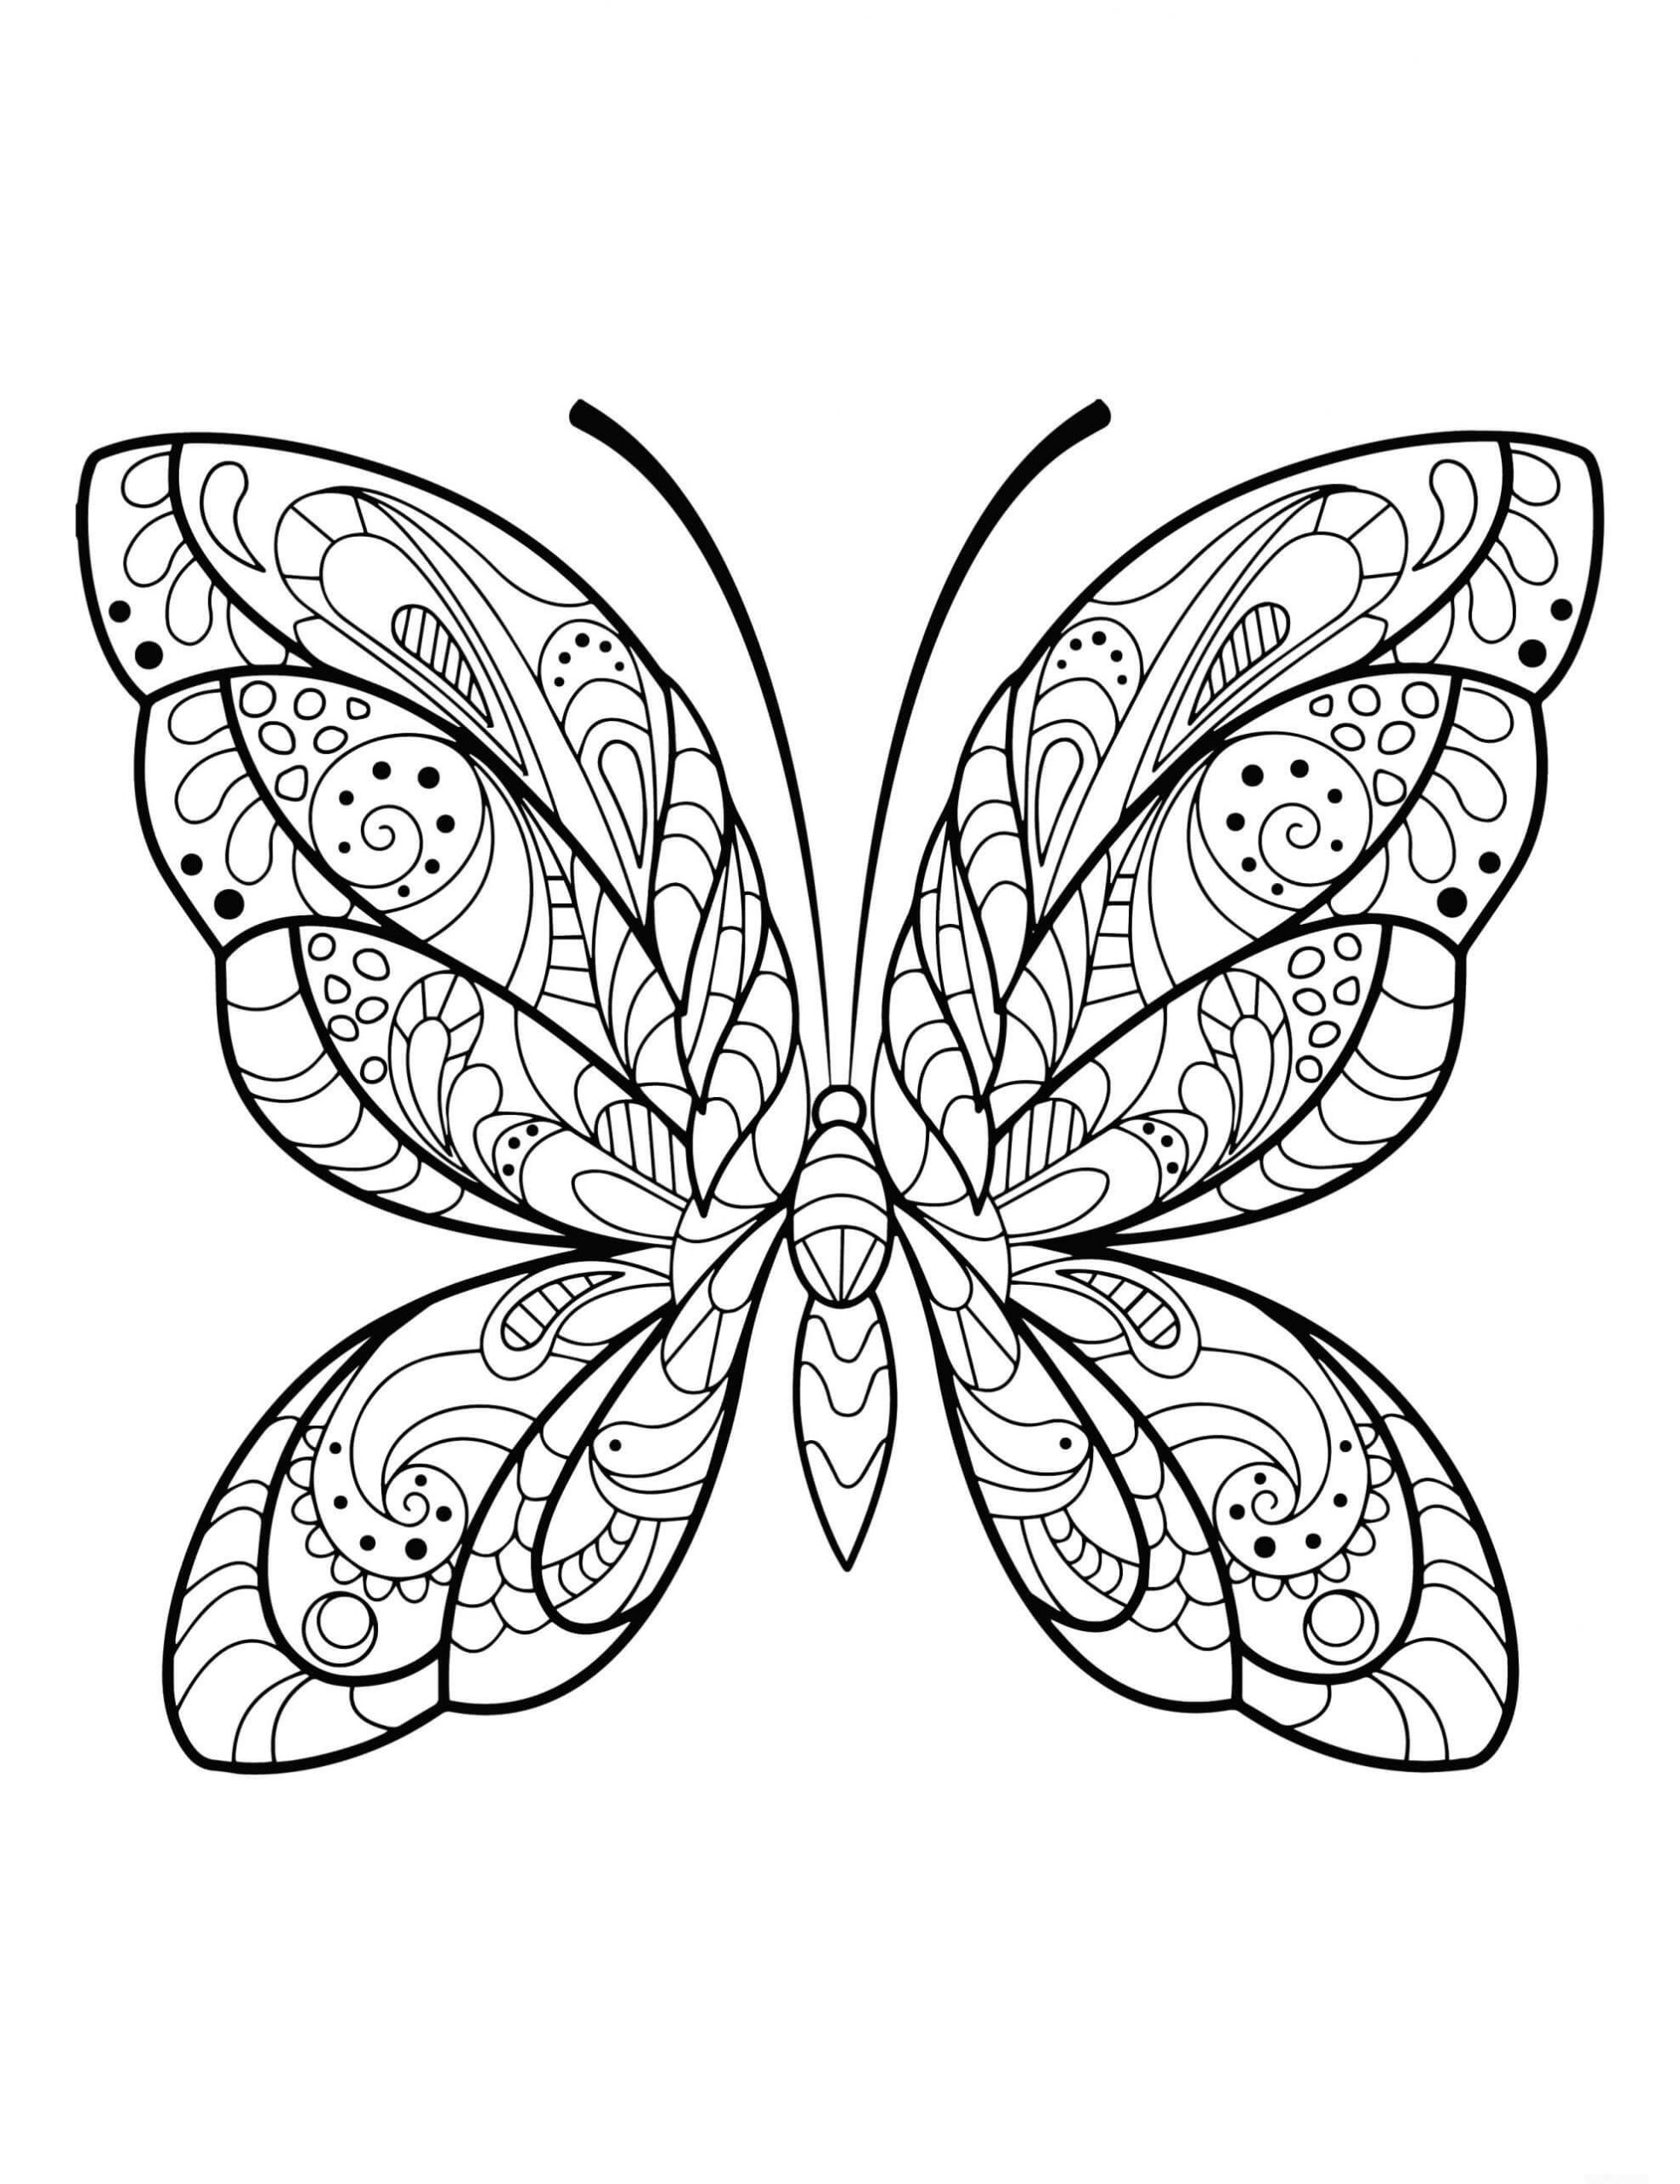 Dibujos de Impresionante Mandala de Mariposas gratis para colorear